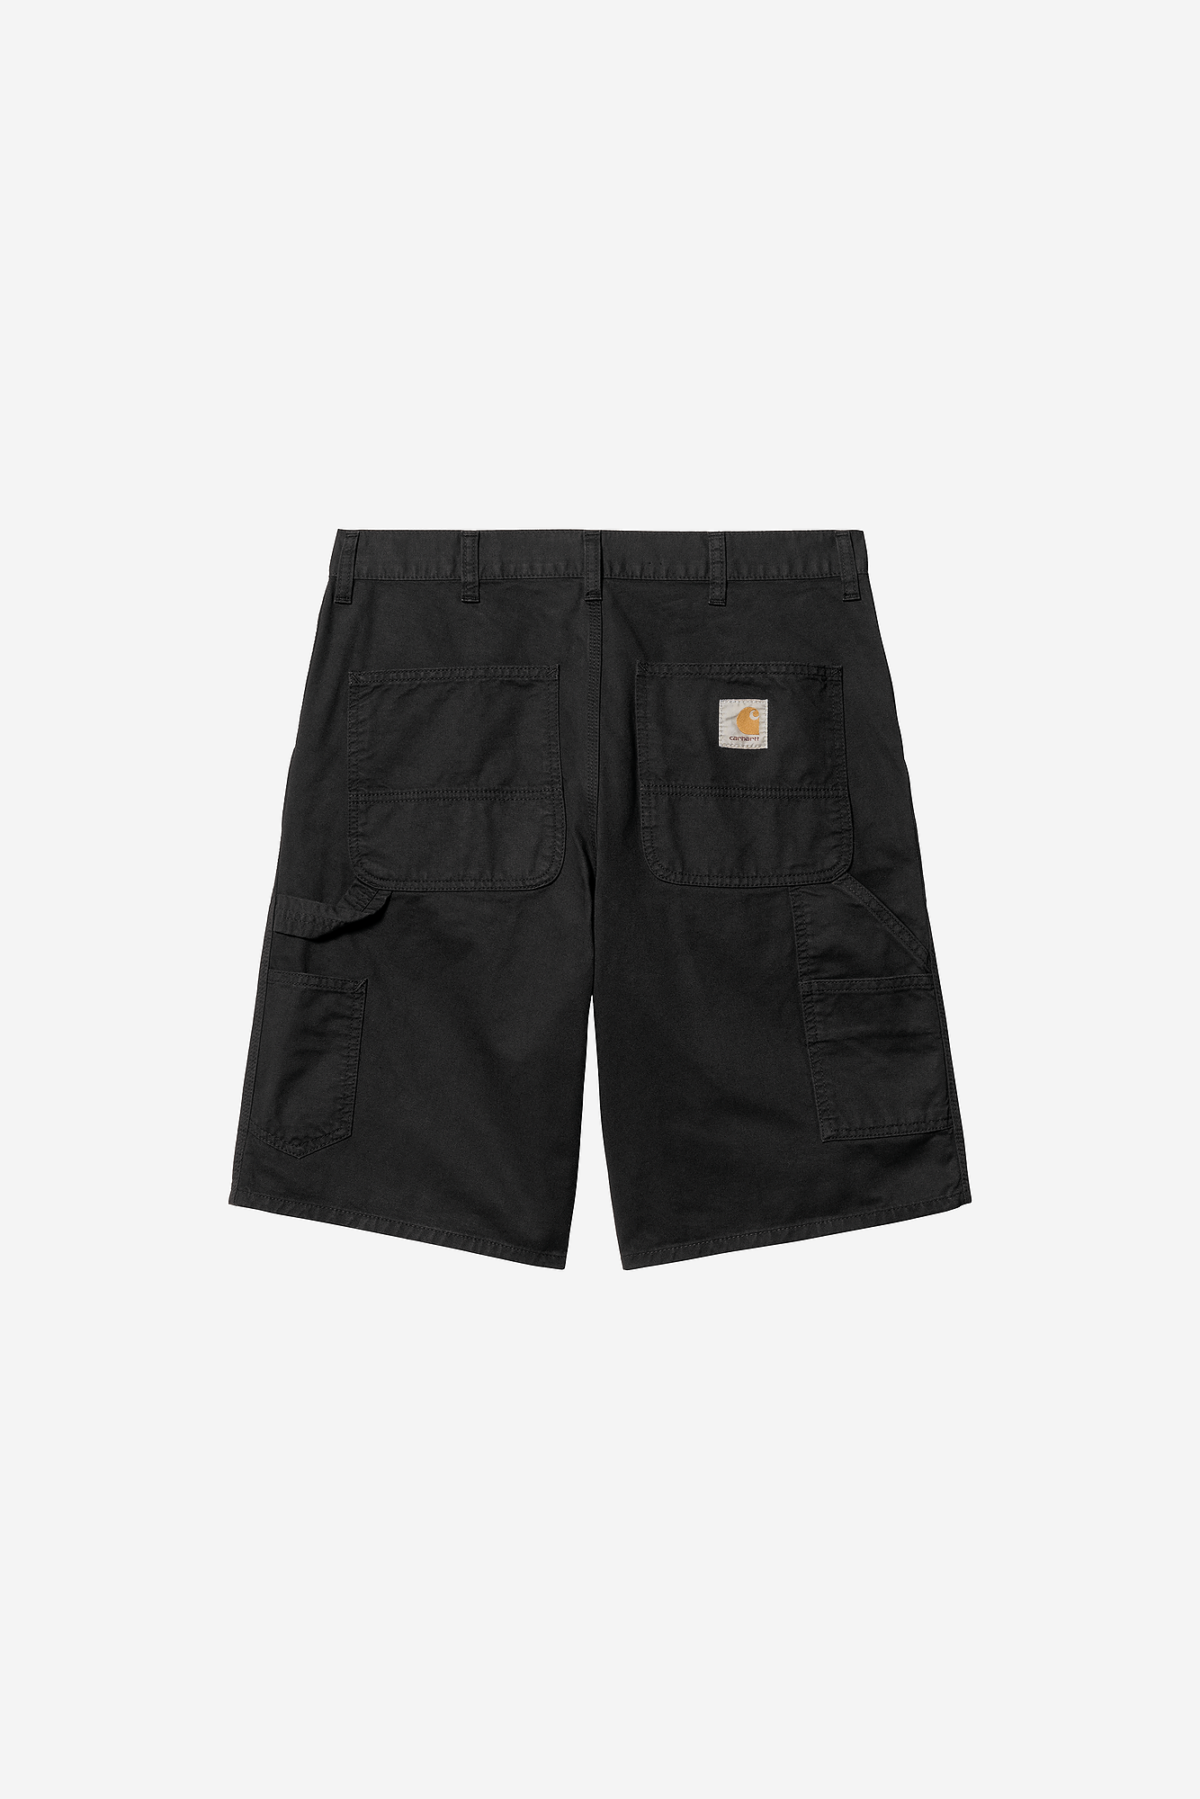 Carhartt WIP Pantalon Corto Negro - Comprar Online